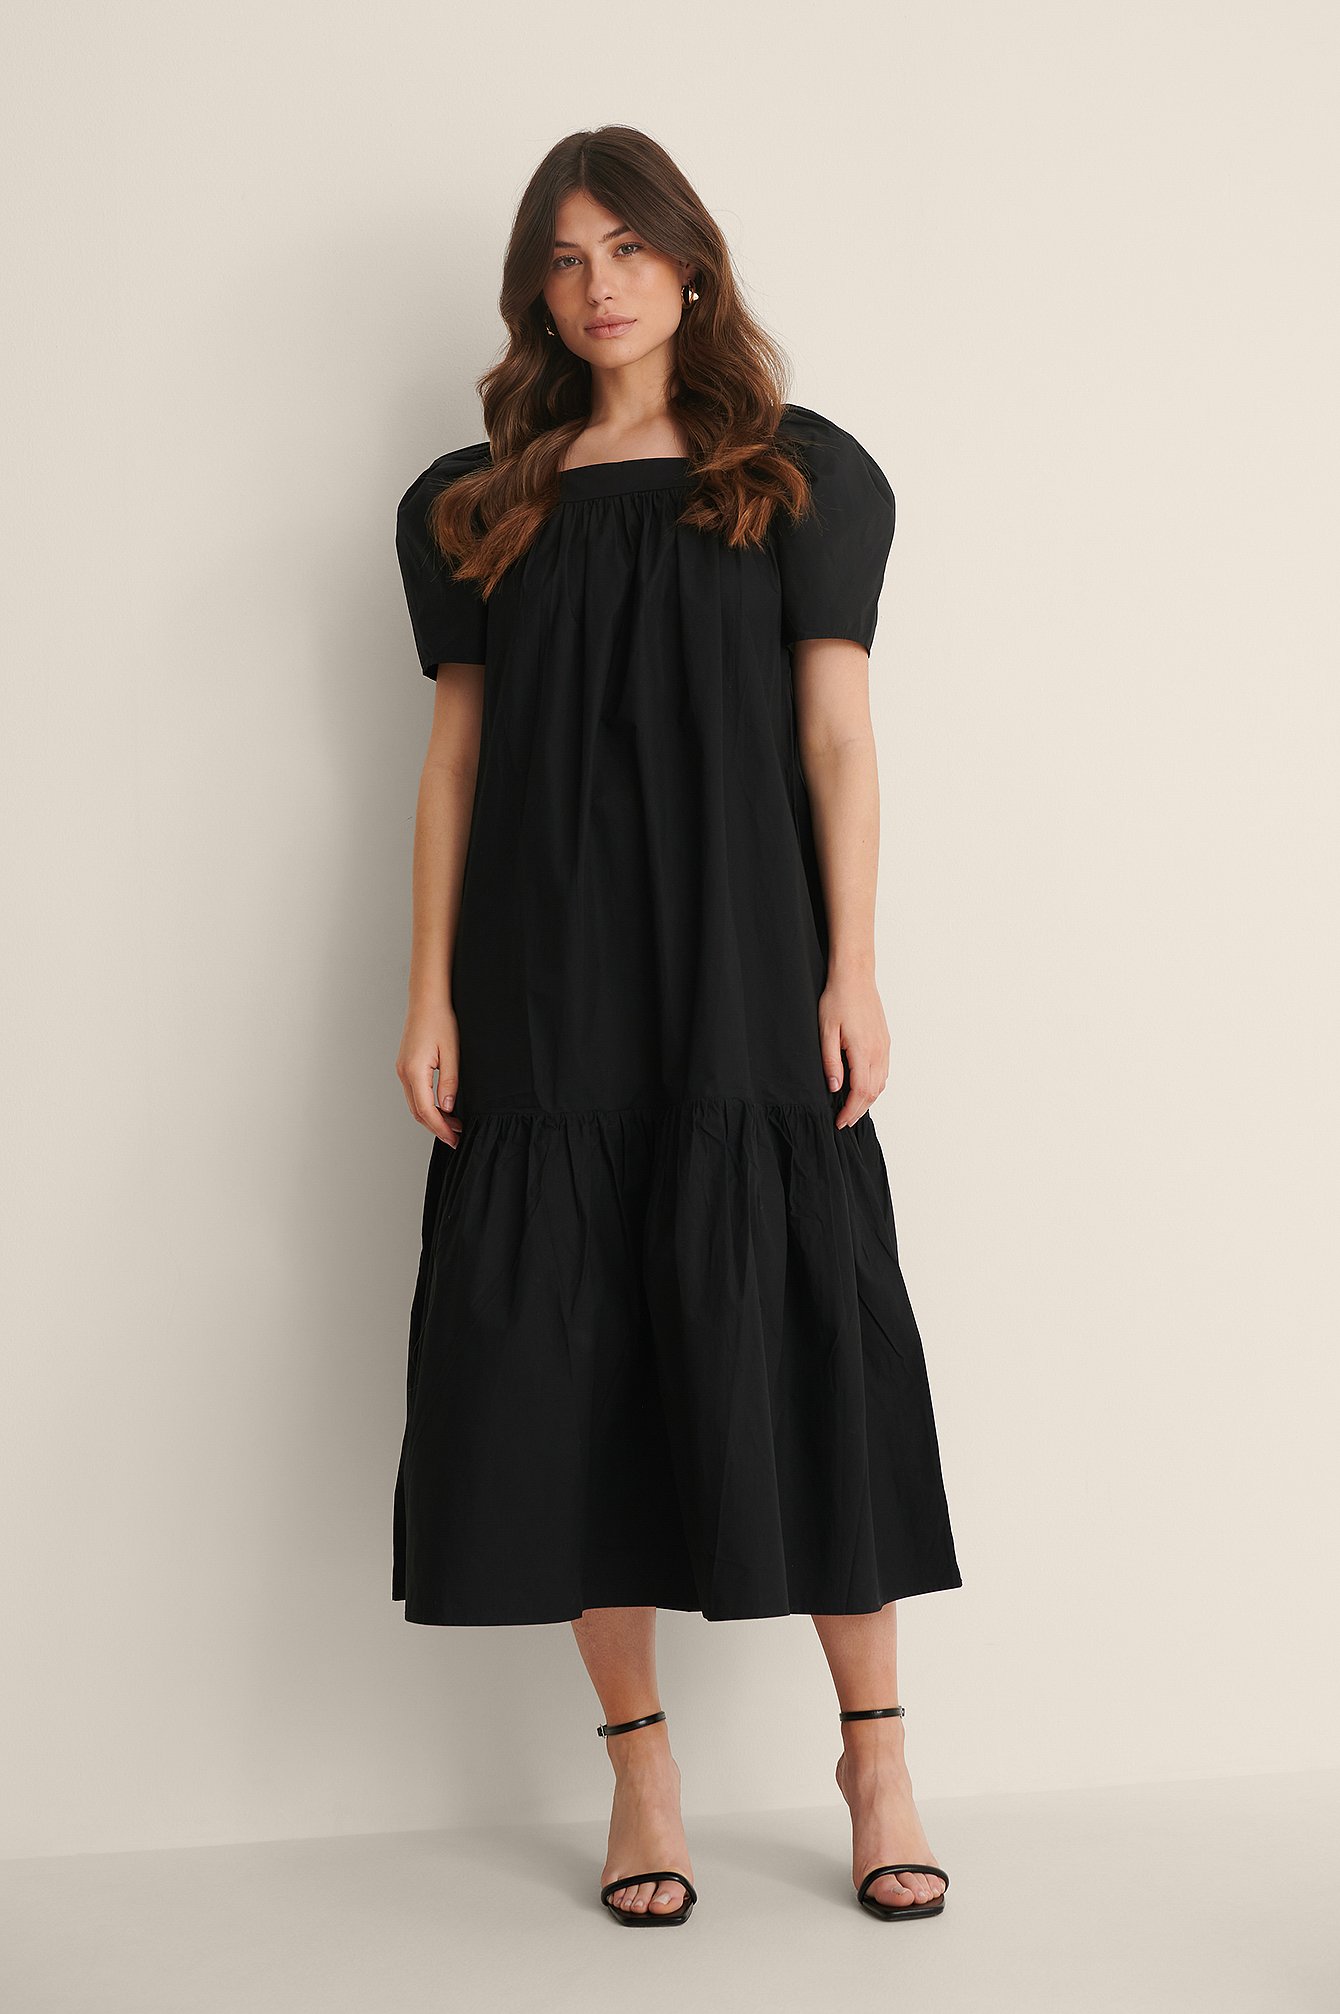 Black Squared Neck Cotton Dress